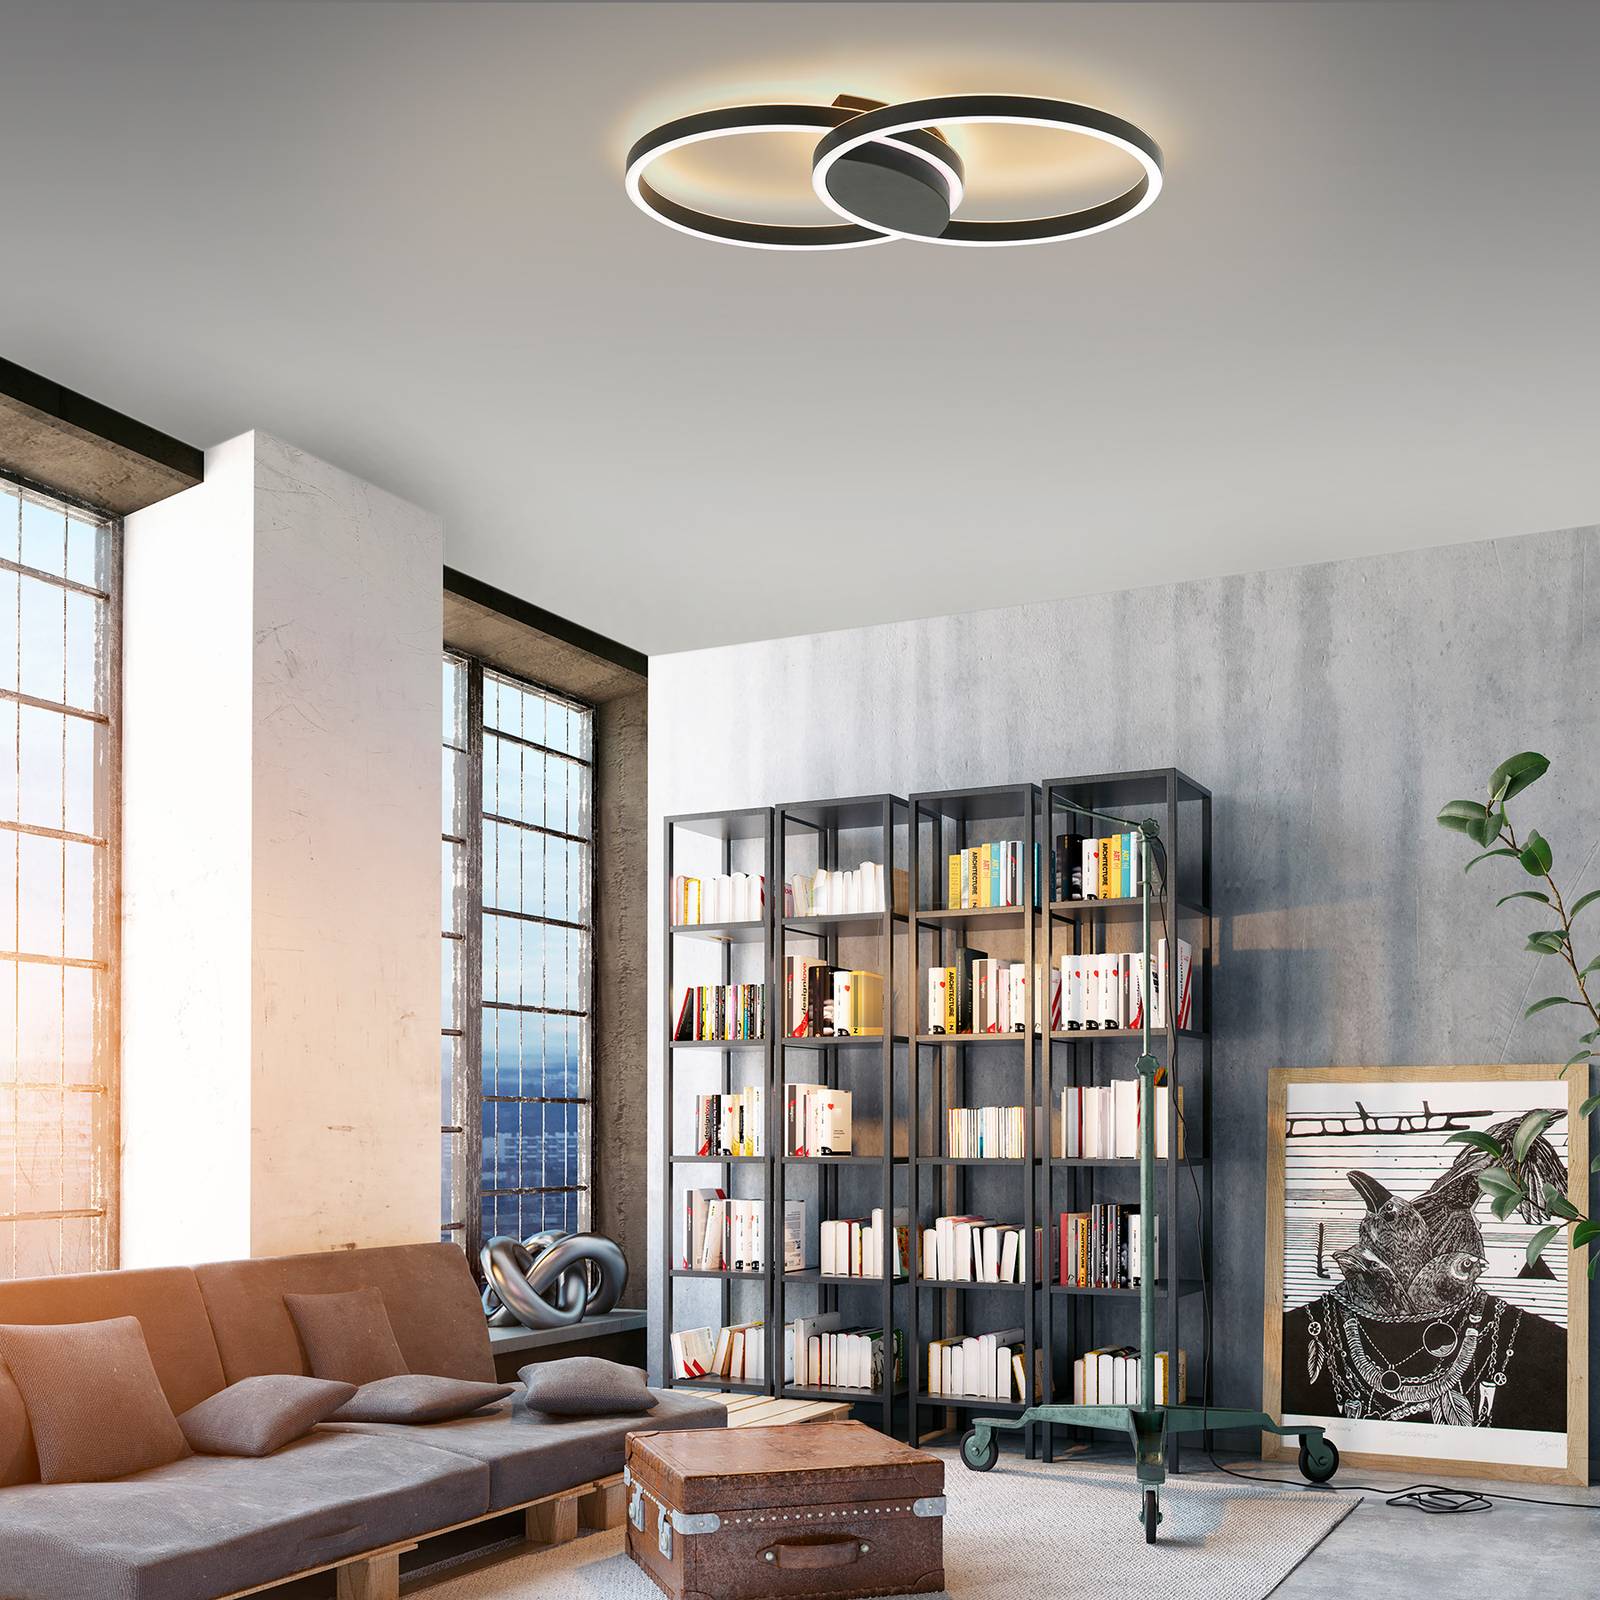 Image of Q-Smart-Home Paul Neuhaus Q-MARKO plafonnier LED, x2, rond 4012248366615